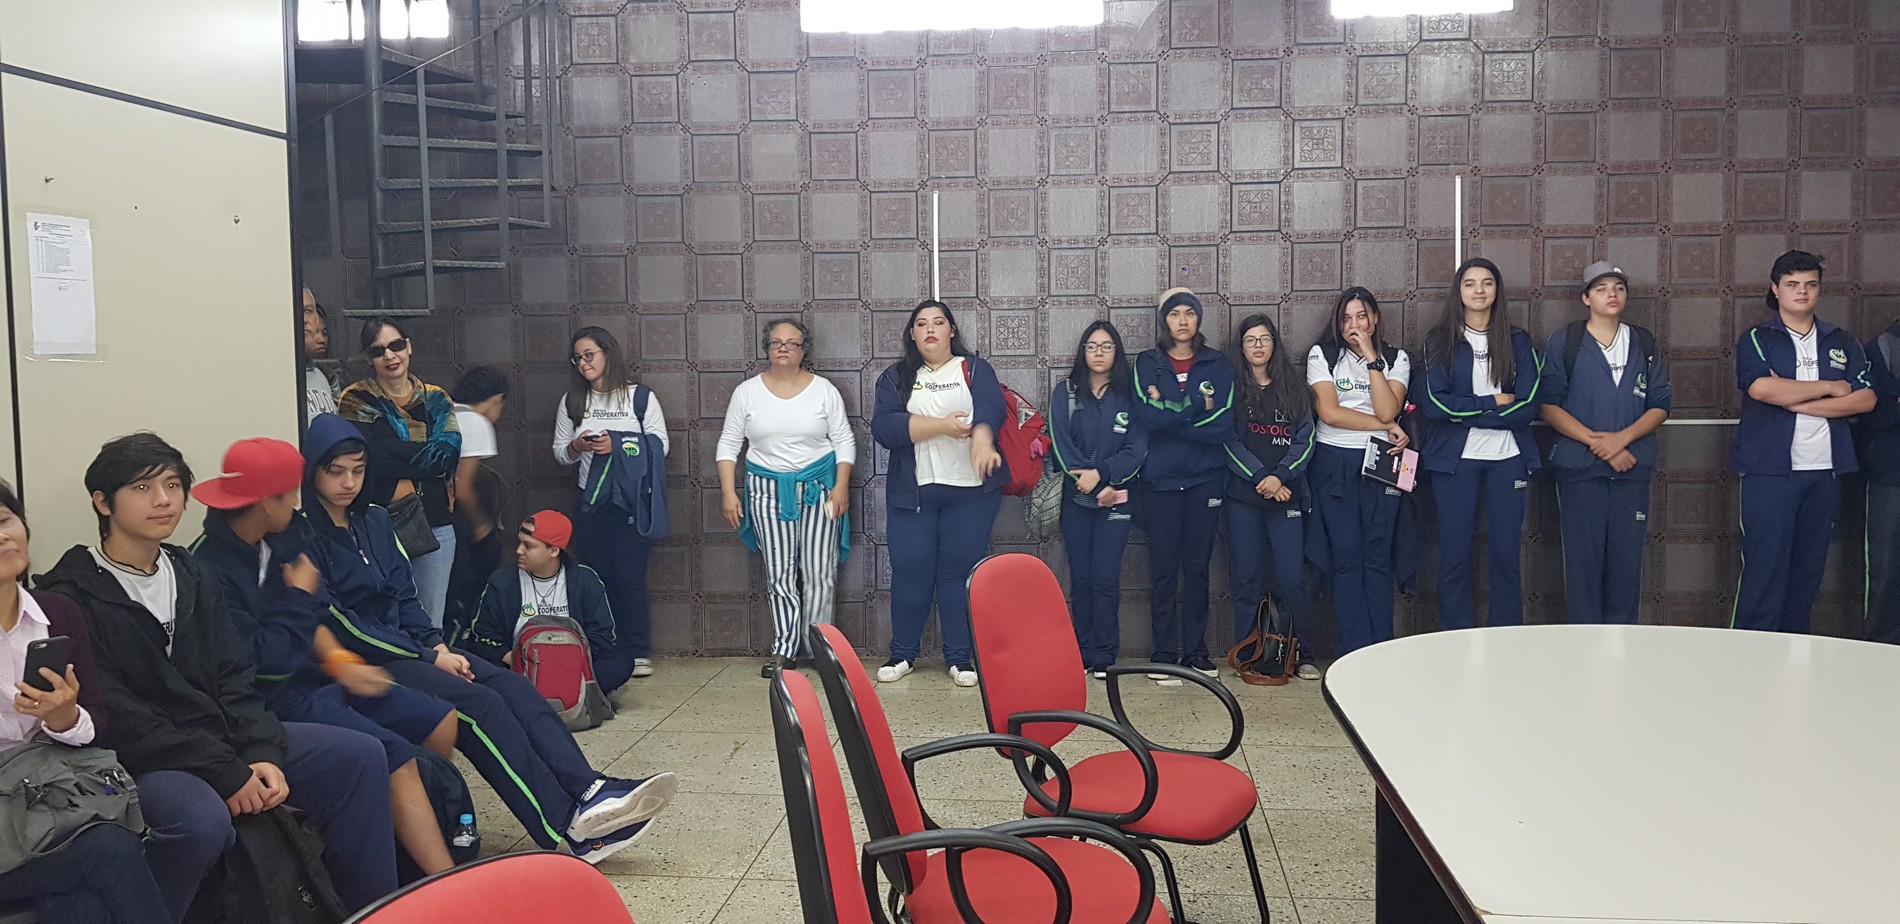 Visita dos alunos do ensino fundamental da Escola Cooperativa Vargem Grande Paulista